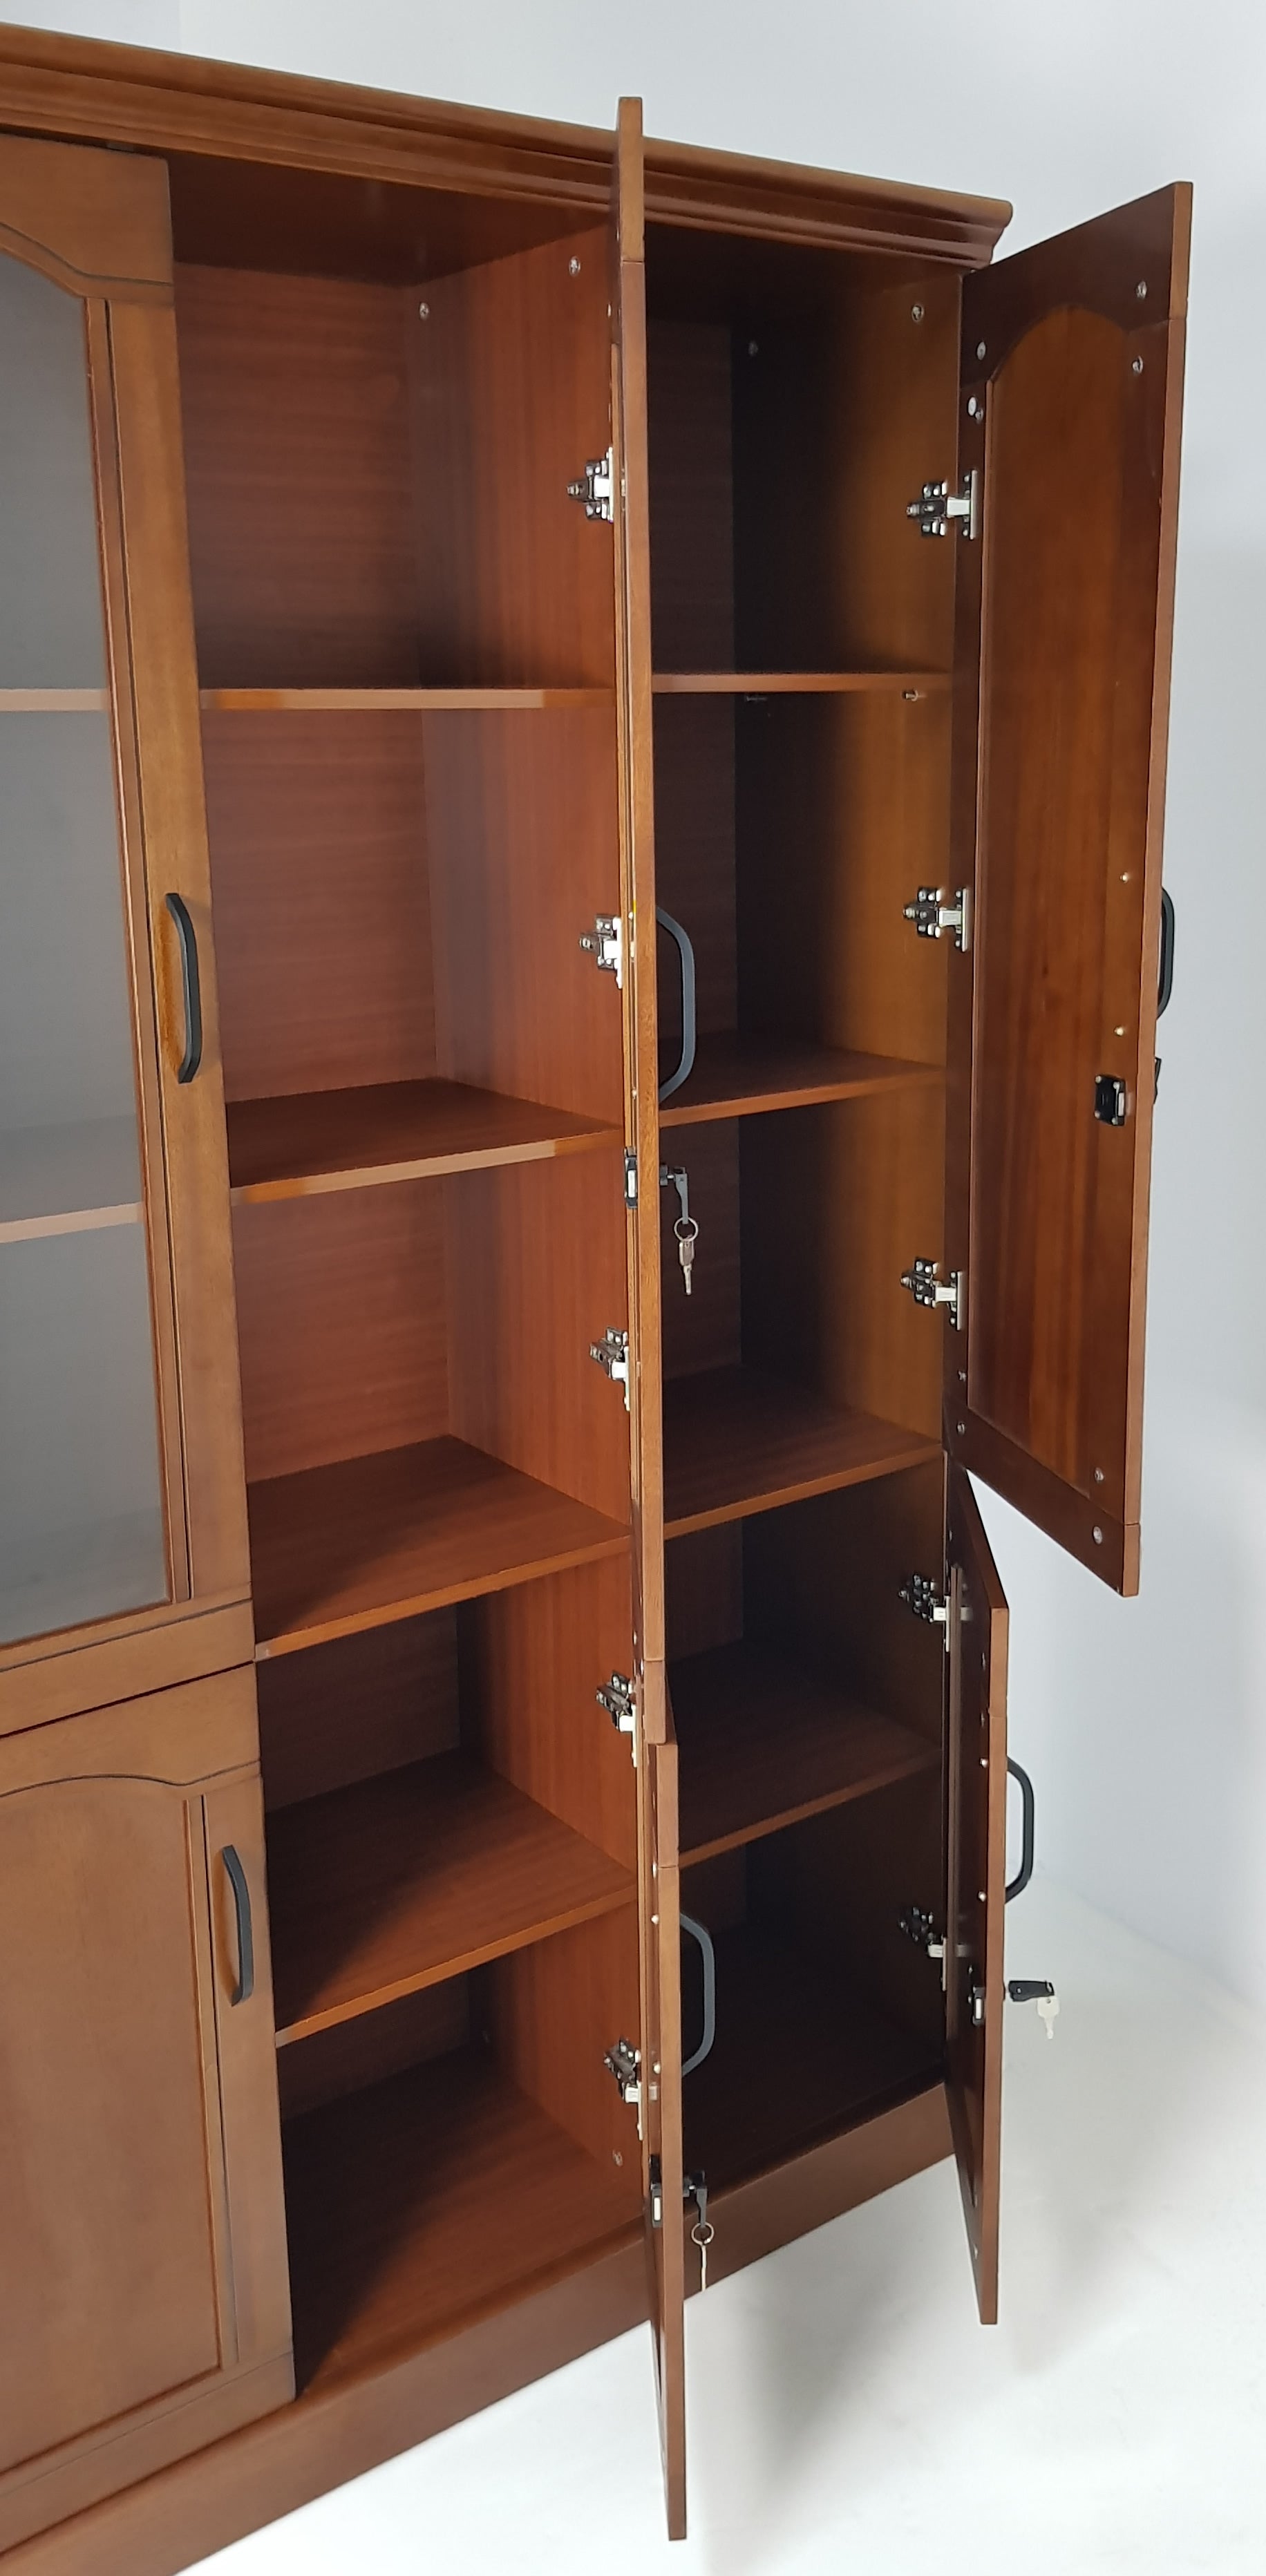 Real Wood Veneer Three Door Executive Bookcase - 1861A-3DR